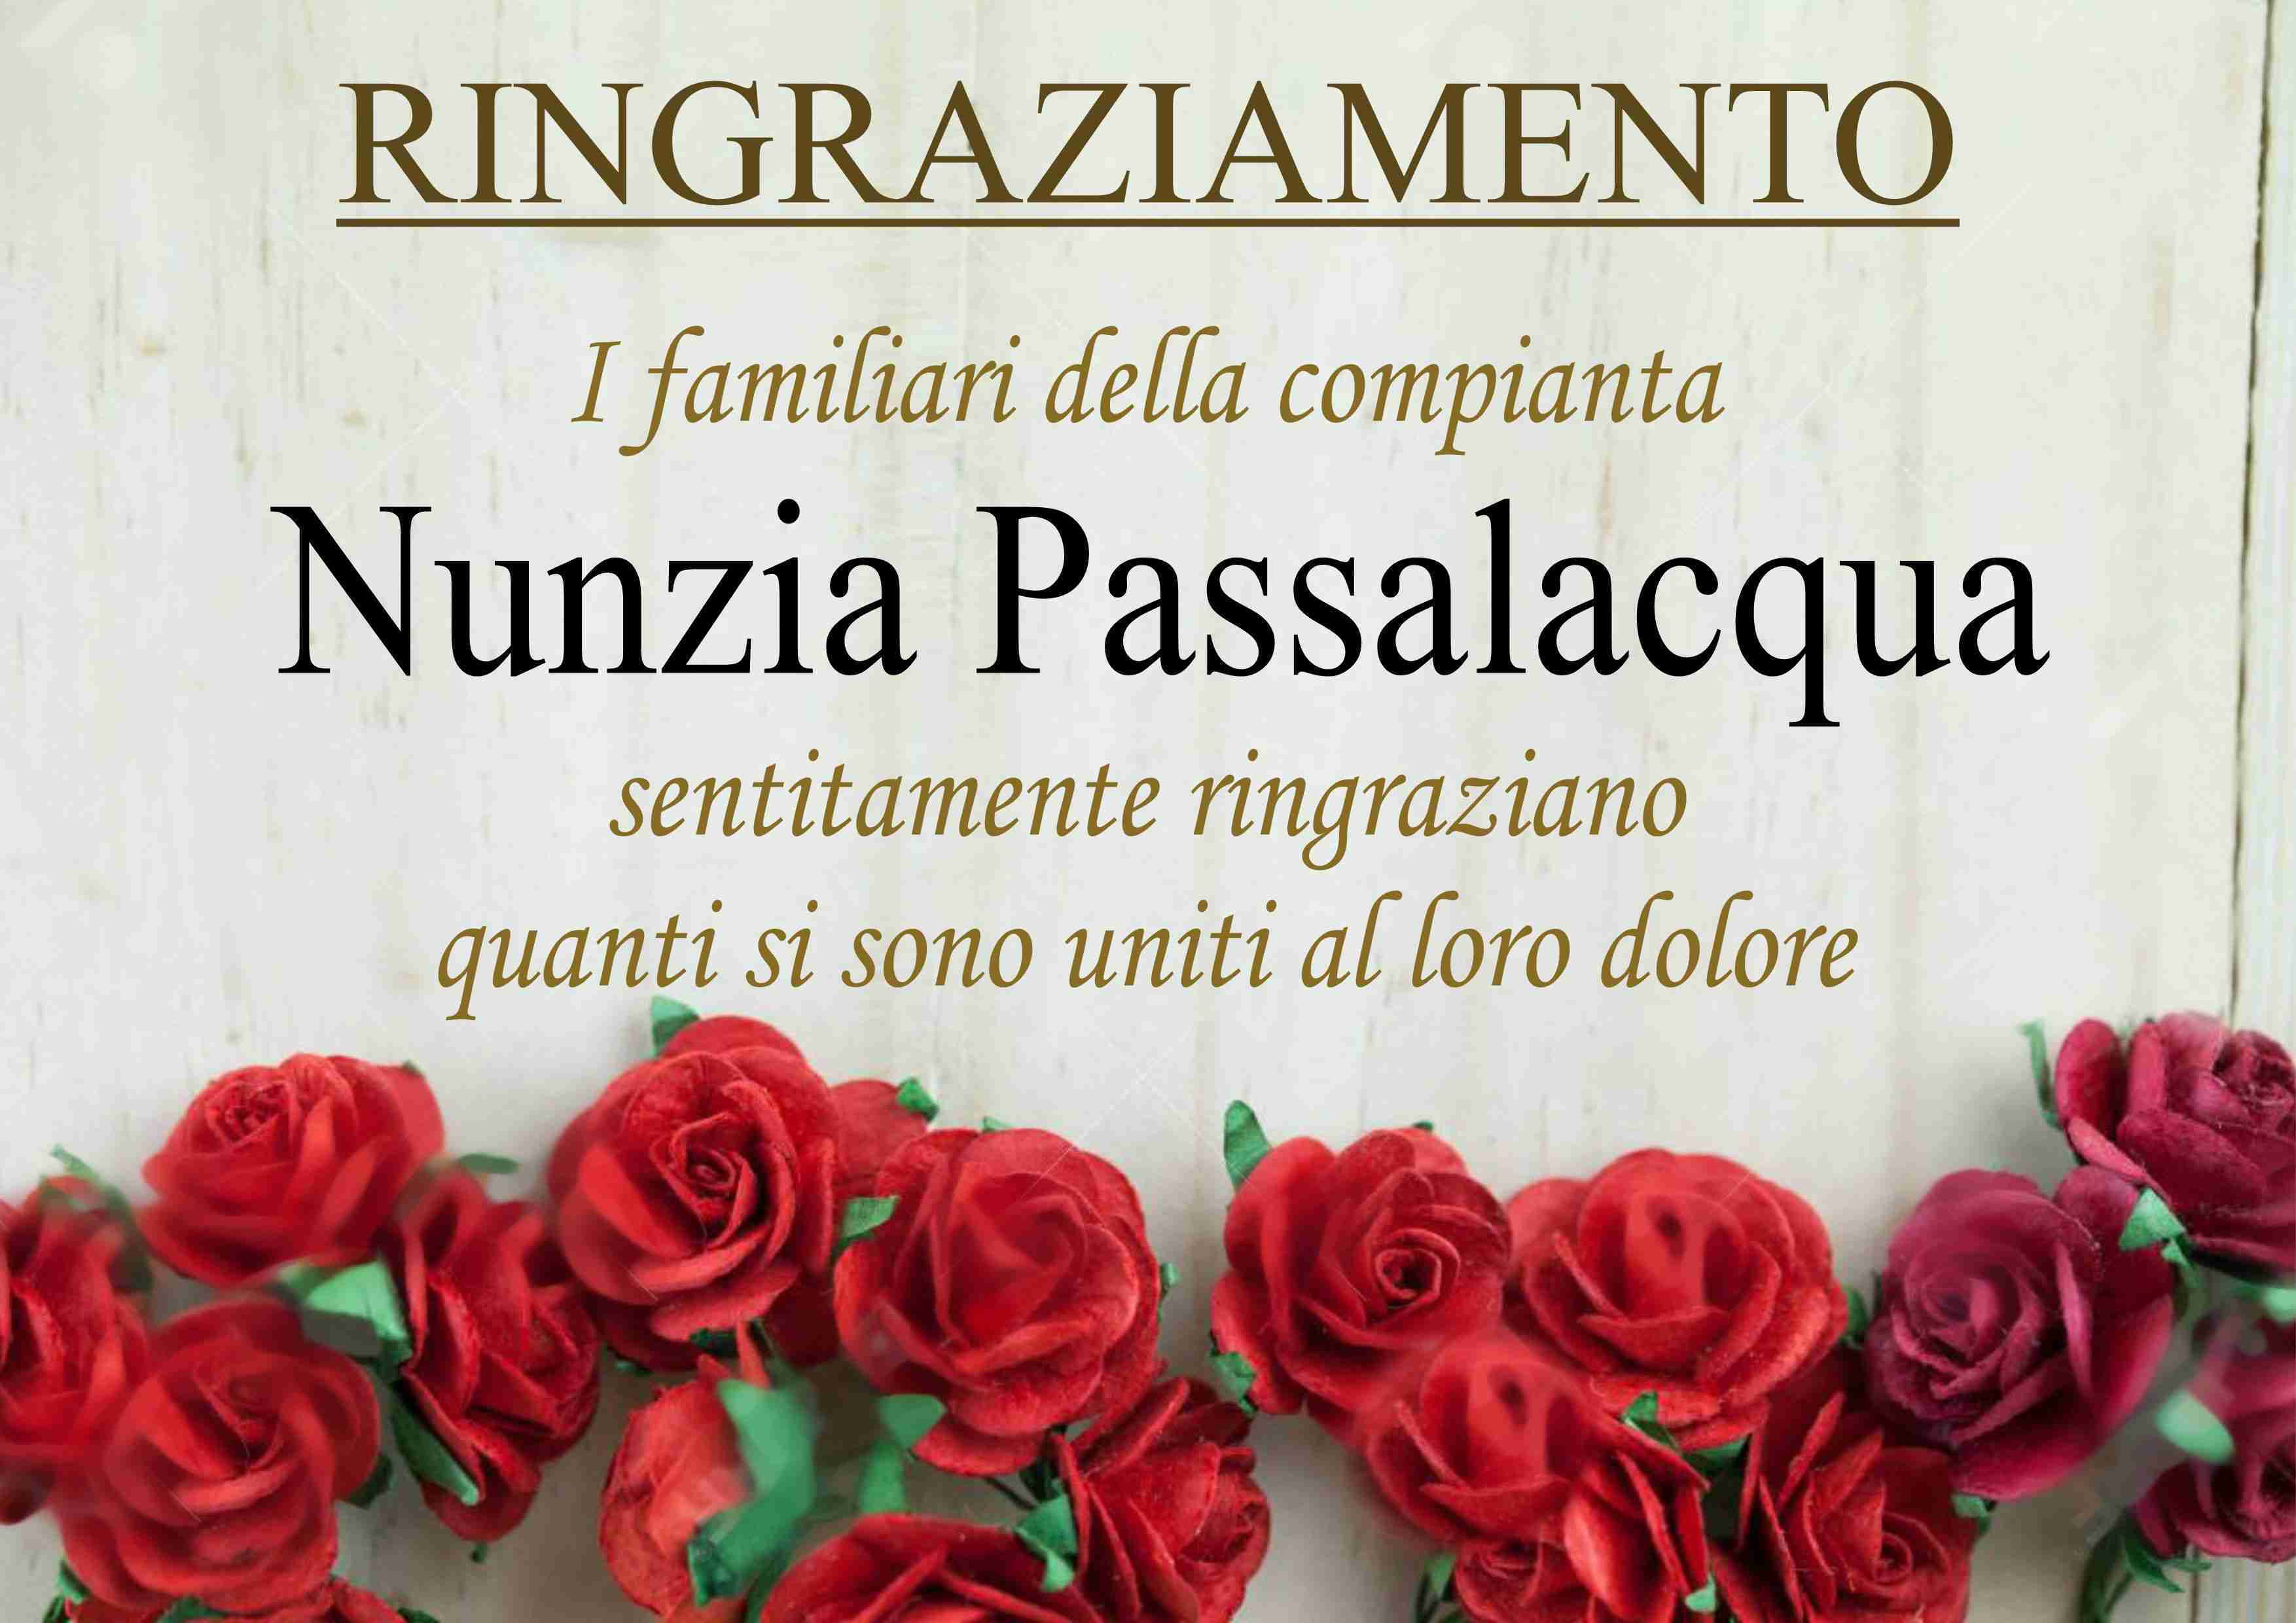 Nunzia Passalacqua